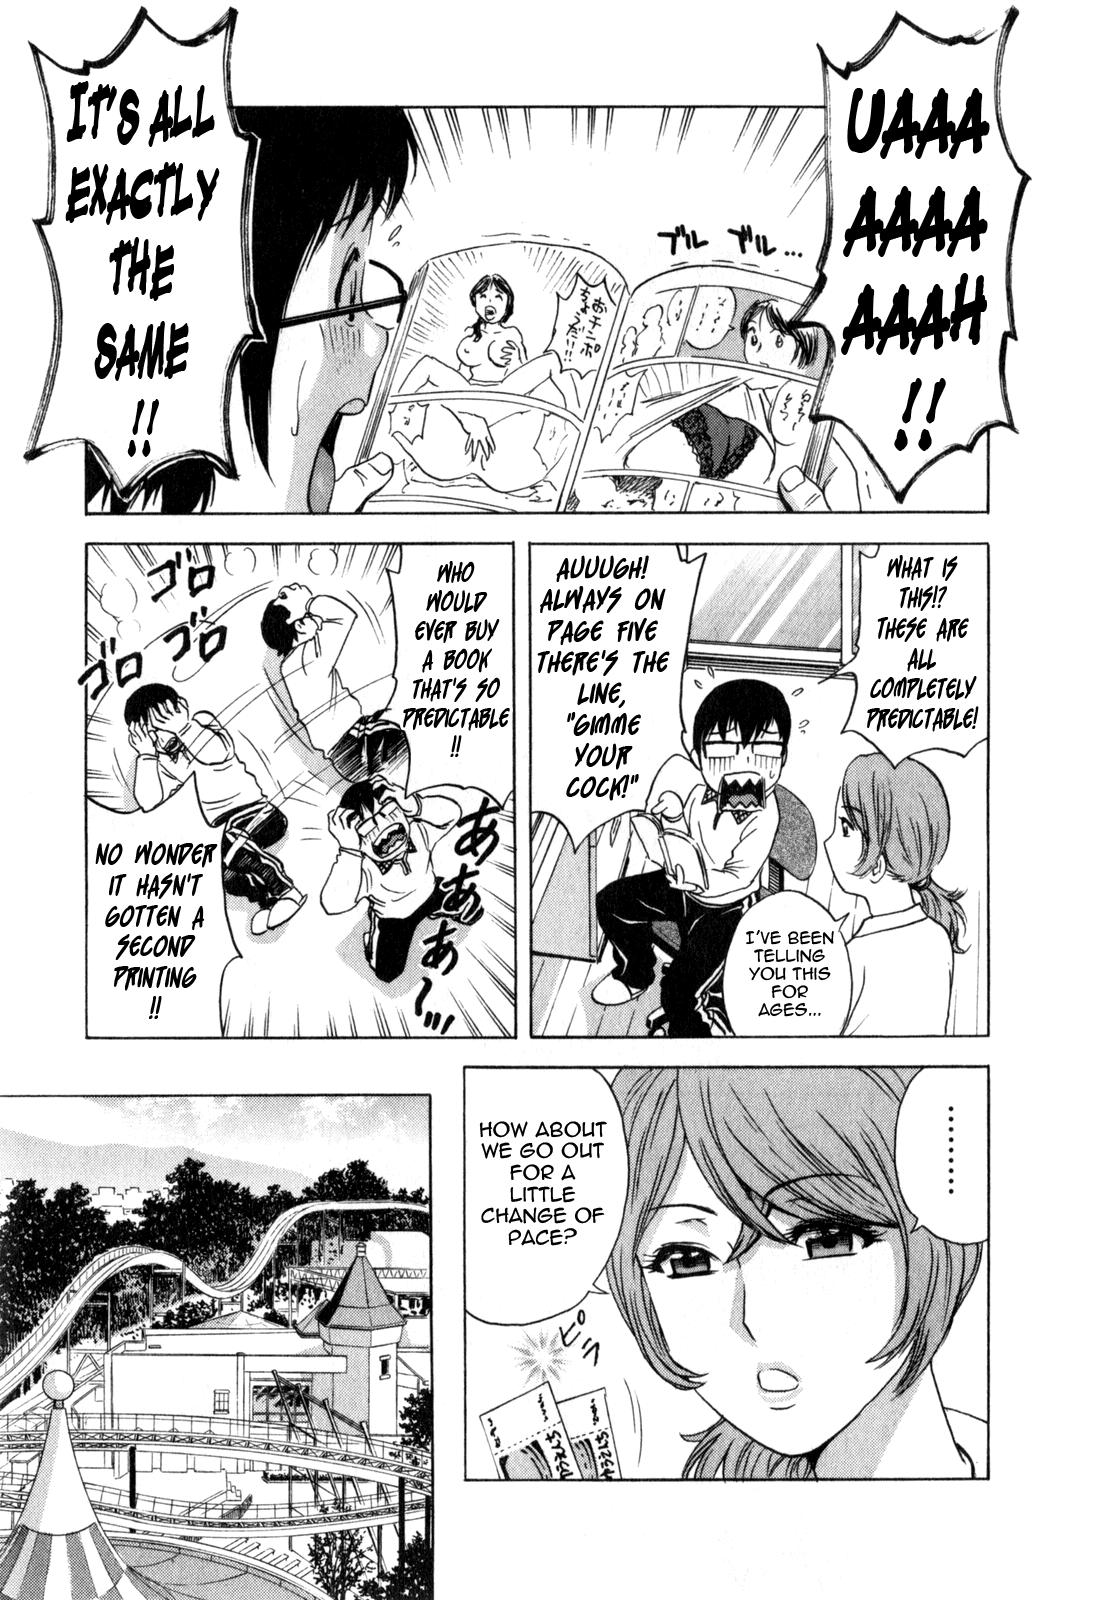 [Hidemaru] Life with Married Women Just Like a Manga 3 - Ch. 1-7 [English] {Tadanohito} 29